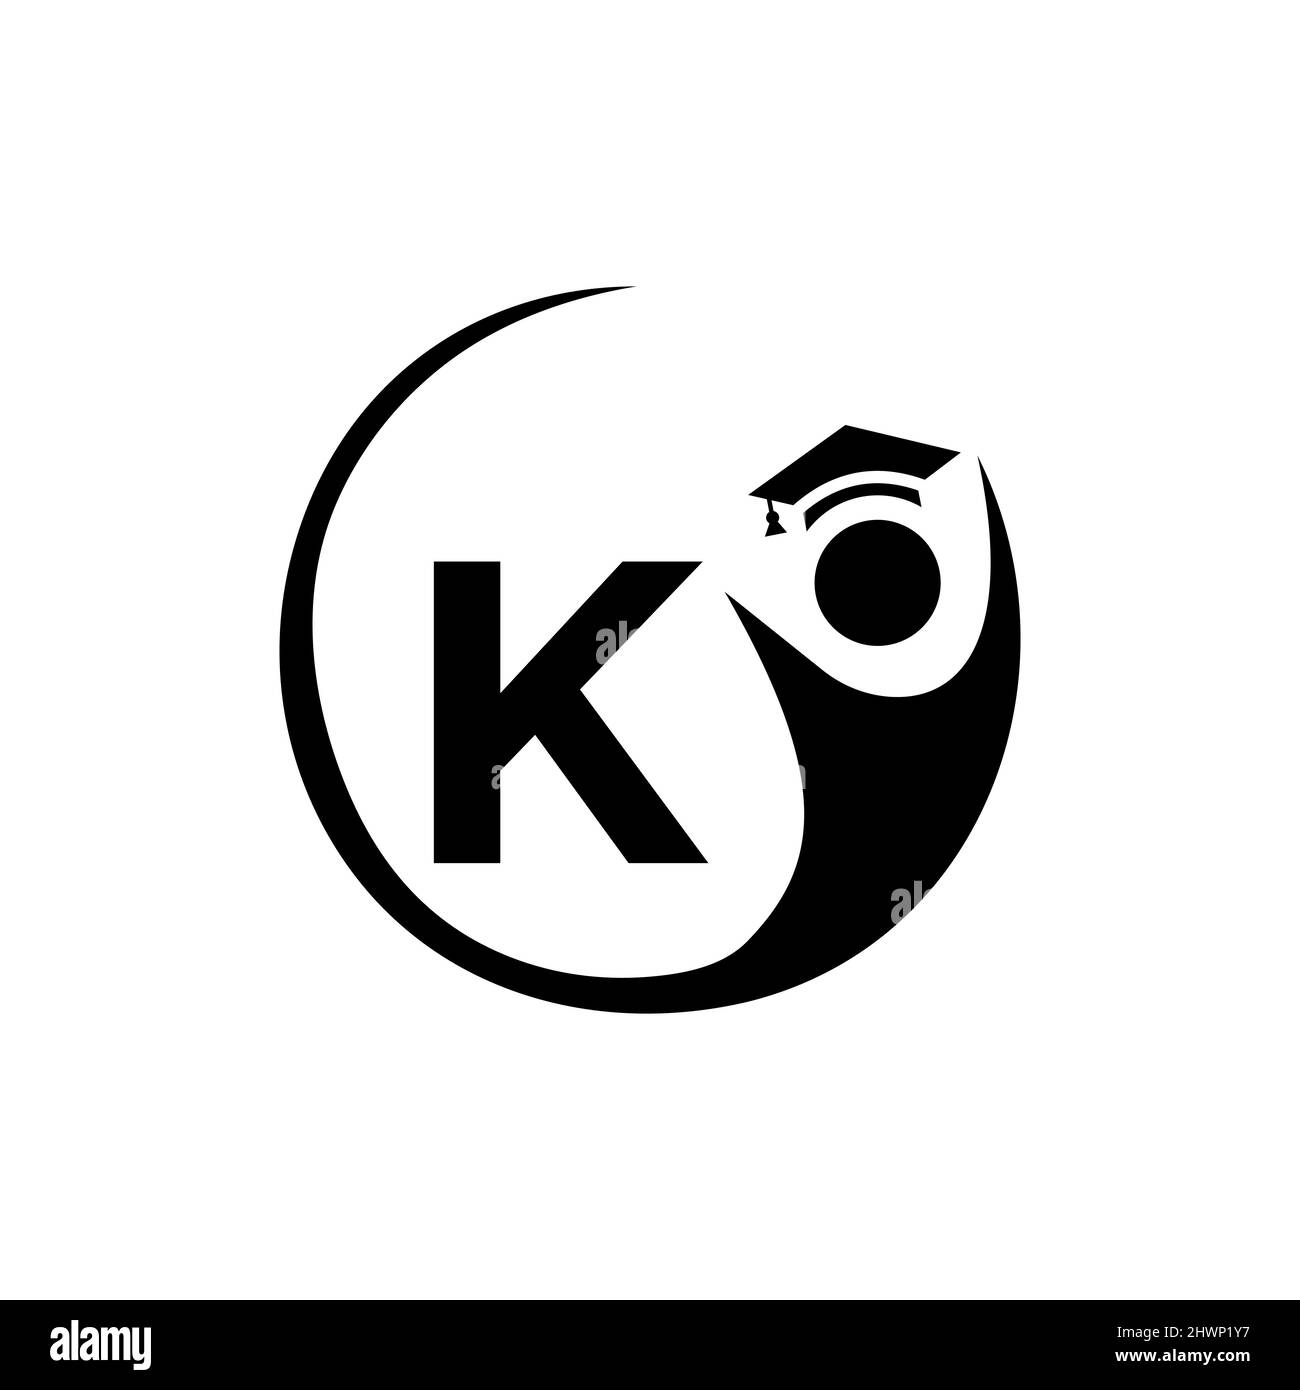 Letter K Education Logo Template. Education Logo On K Letter, Initial Education Hat Concept Template Stock Vector